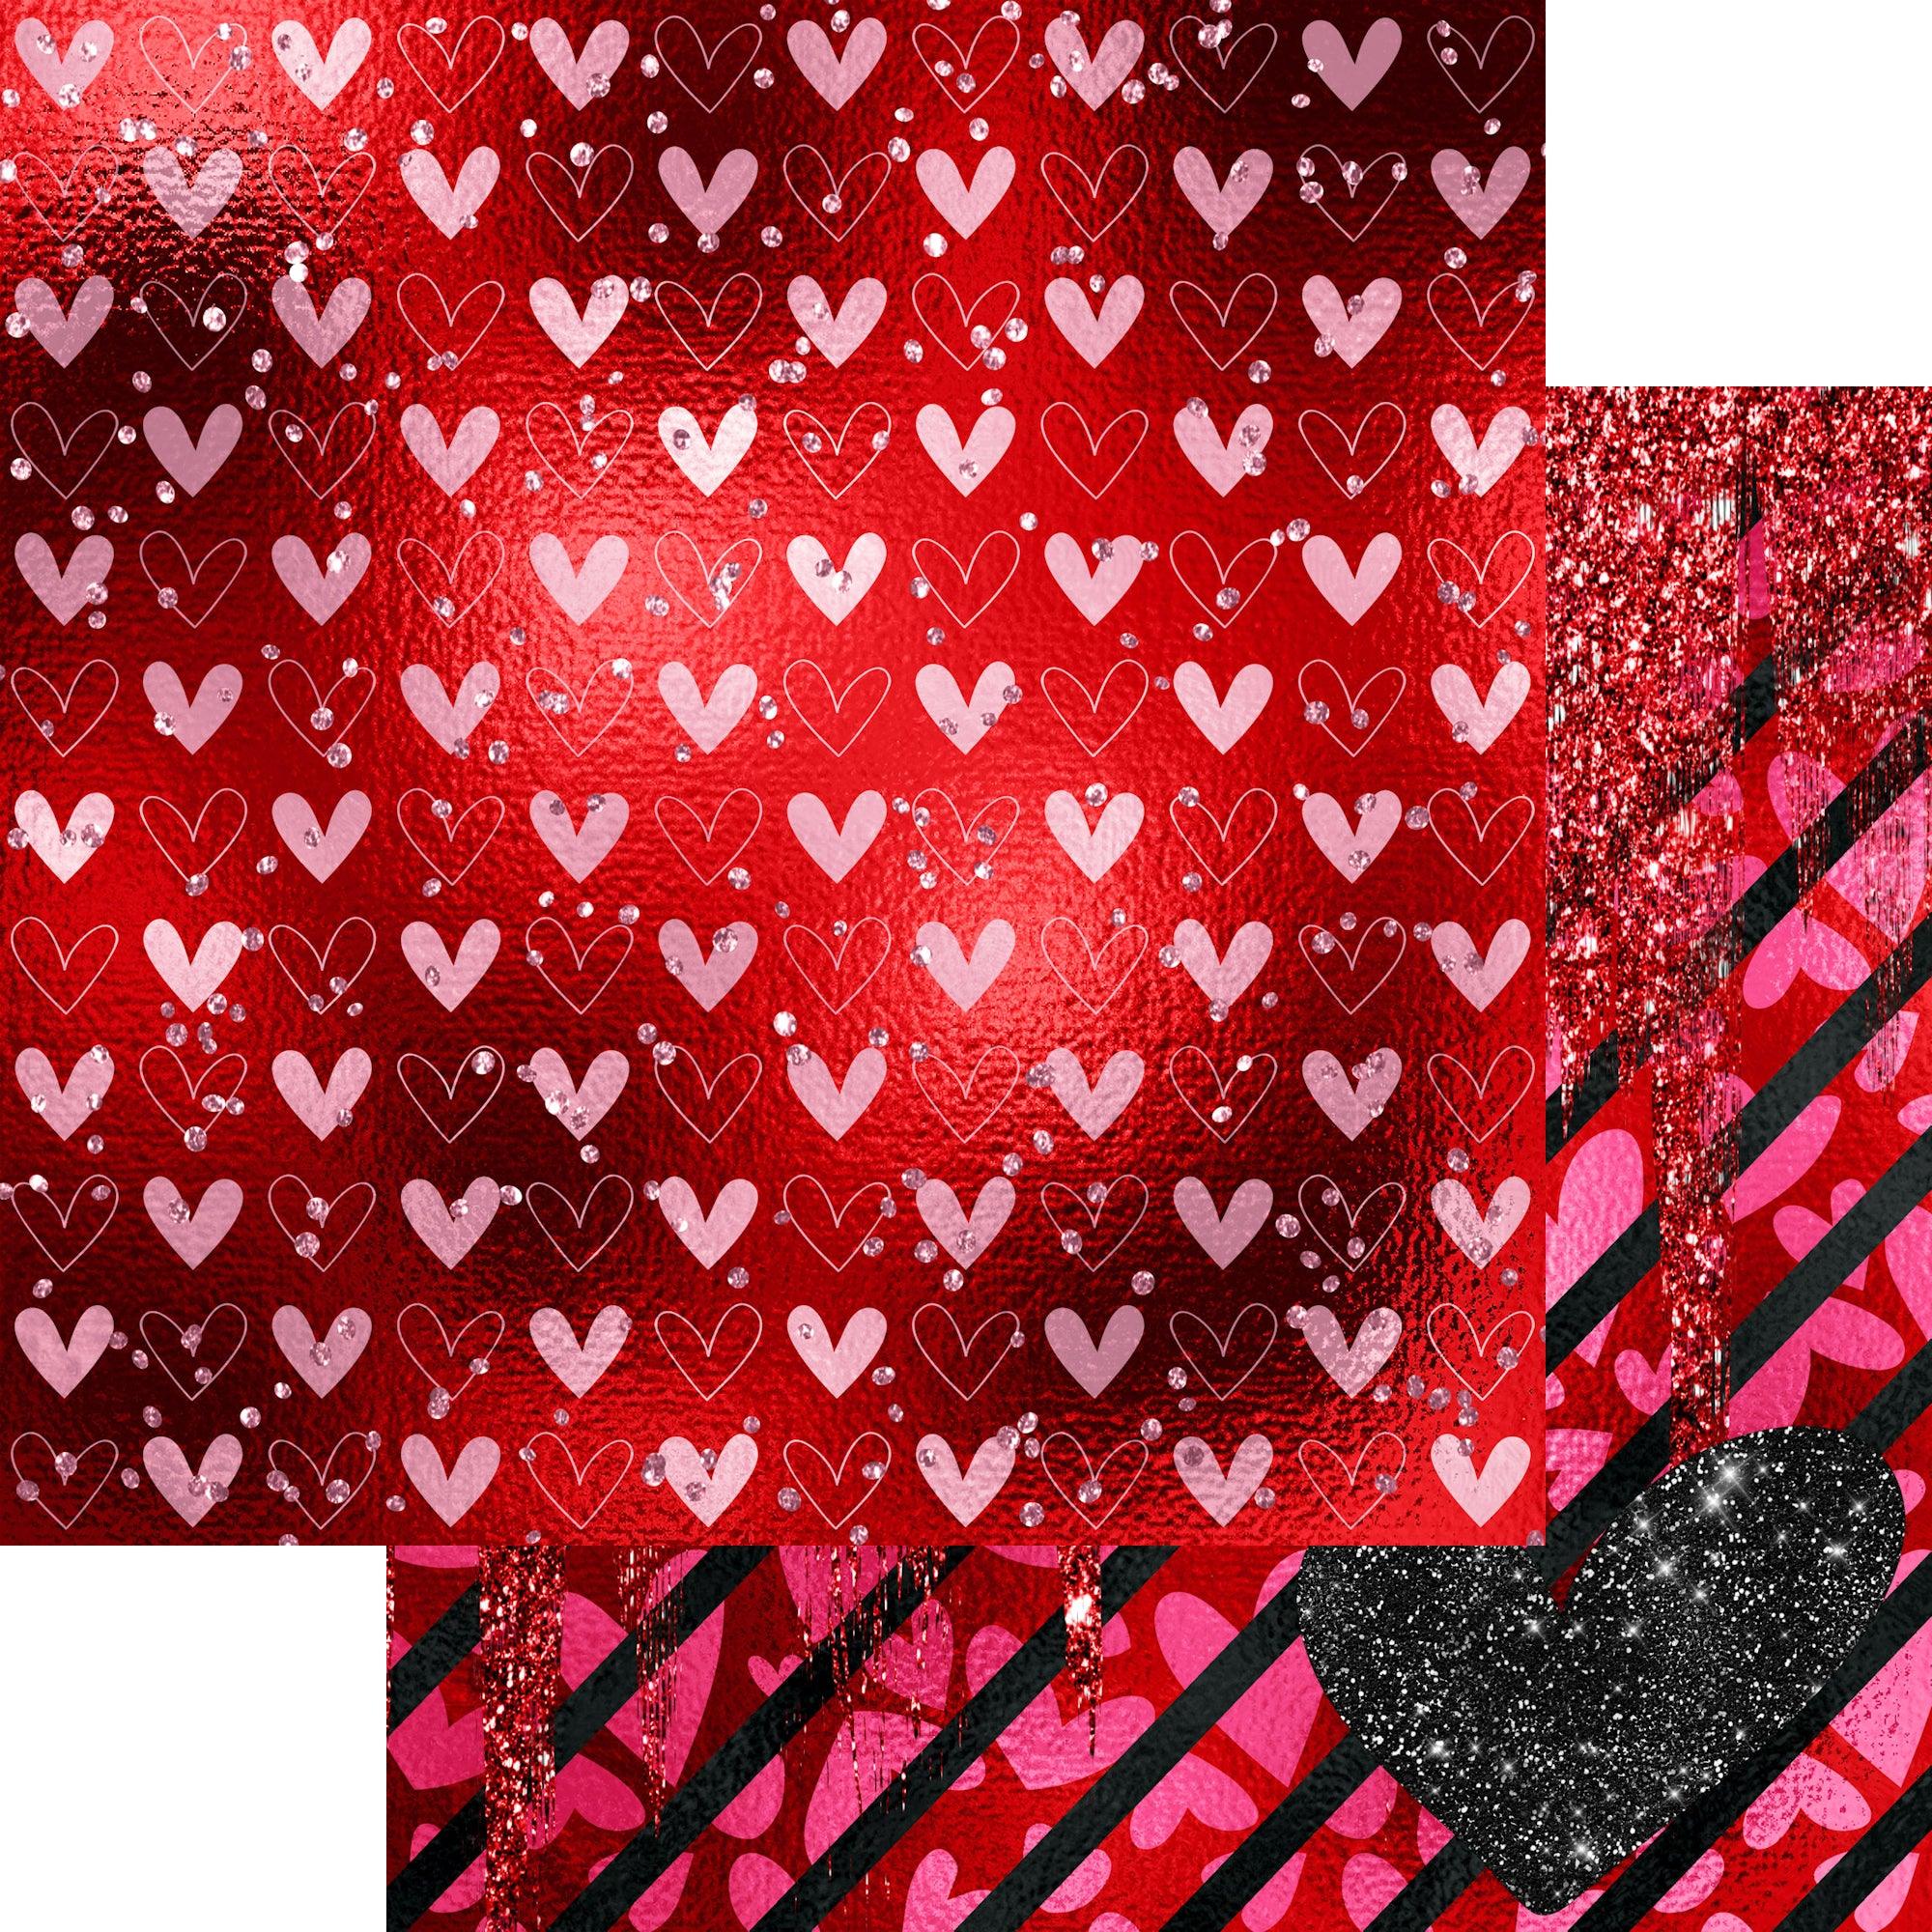 Be Mine Valentine 12 x 12 Scrapbook Paper & Embellishment Kit by SSC Designs - Scrapbook Supply Companies